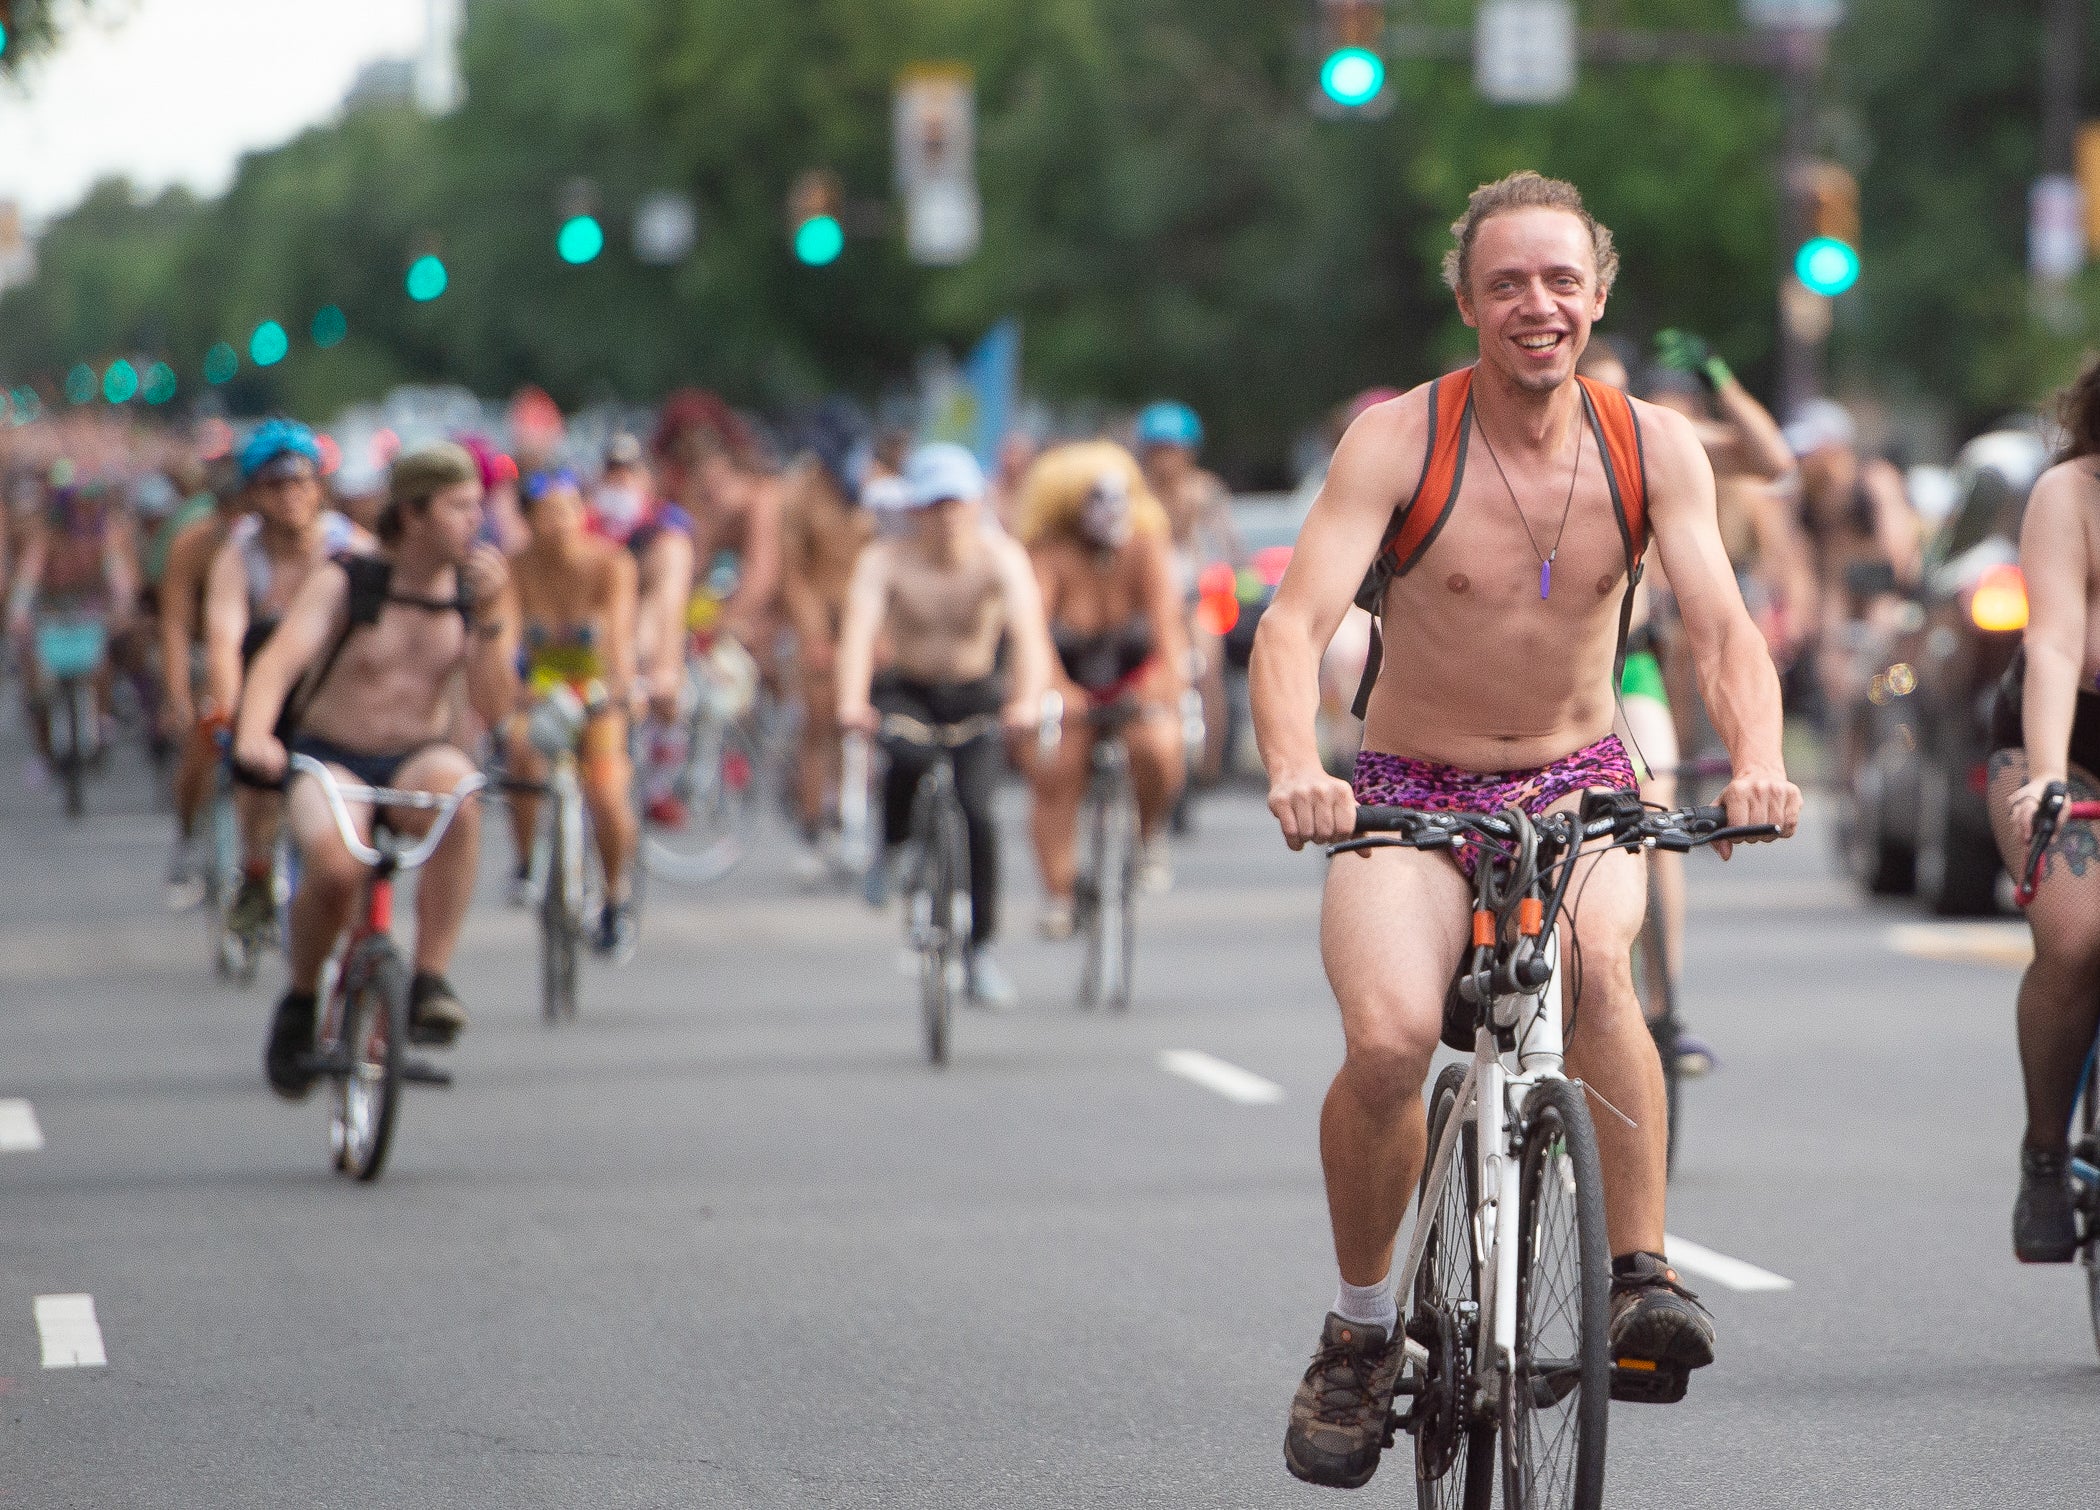 chelsea ferrier add nude bike ride pics photo